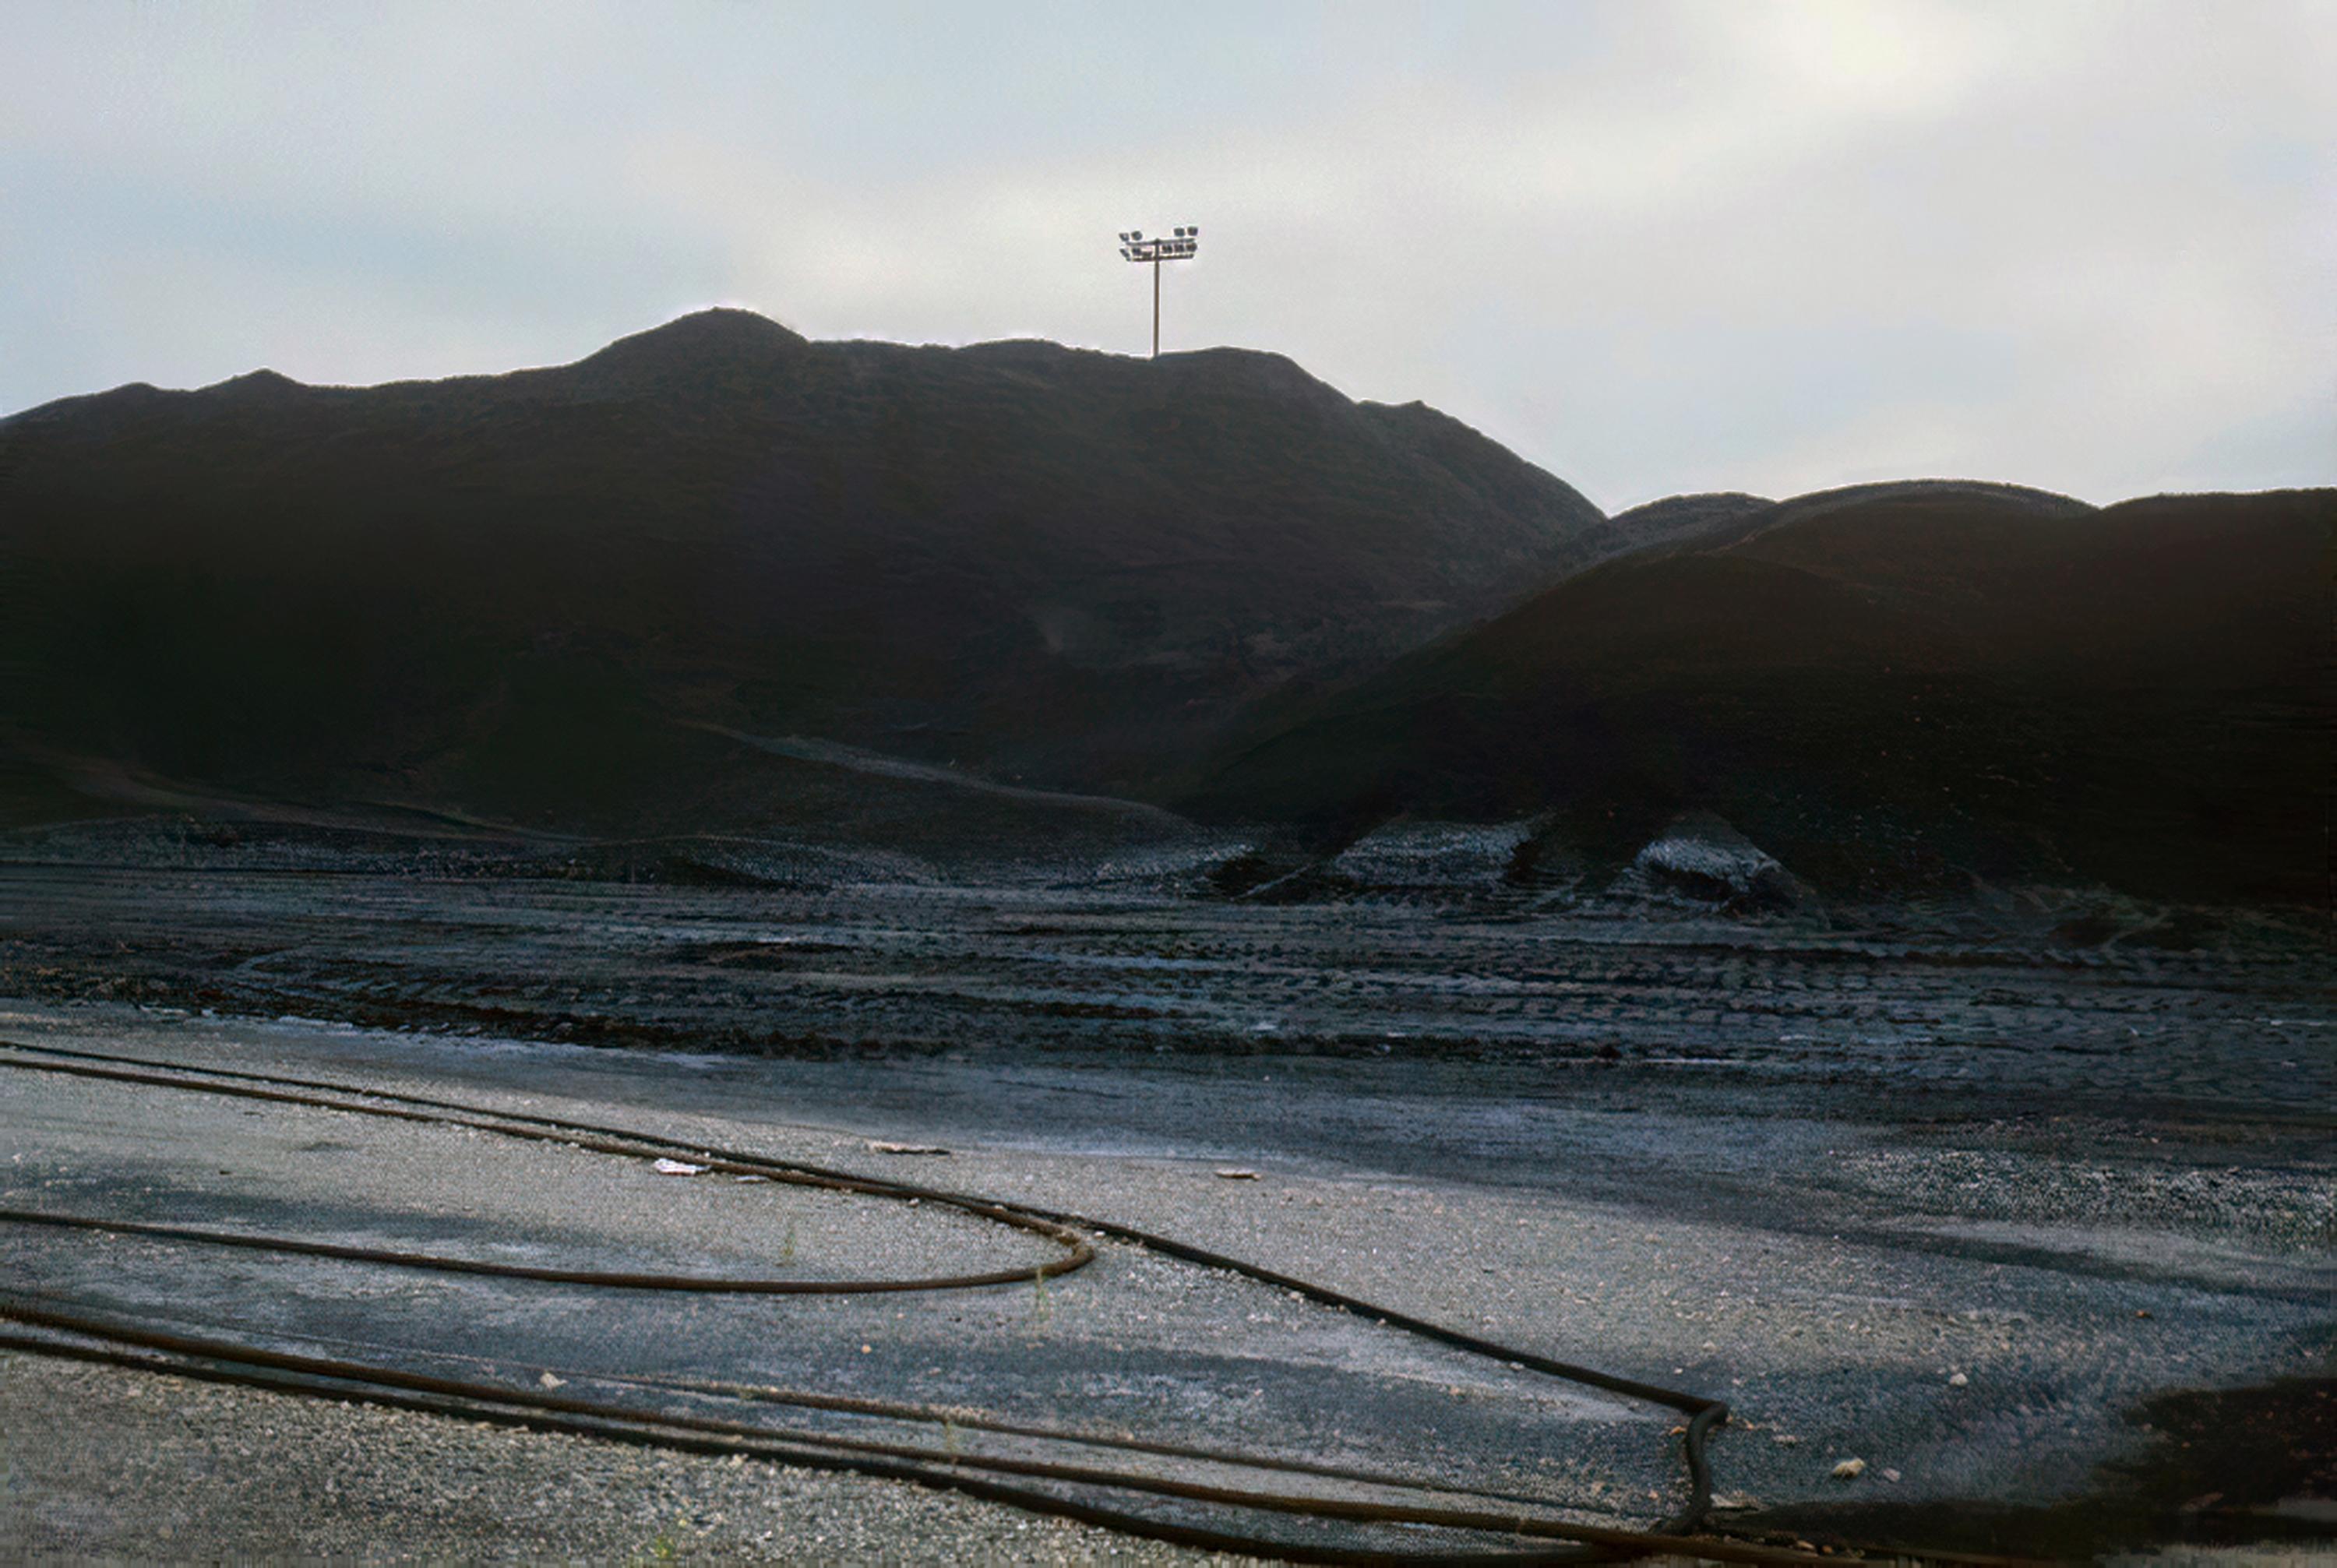 A grainy photo of massive hills of coal.